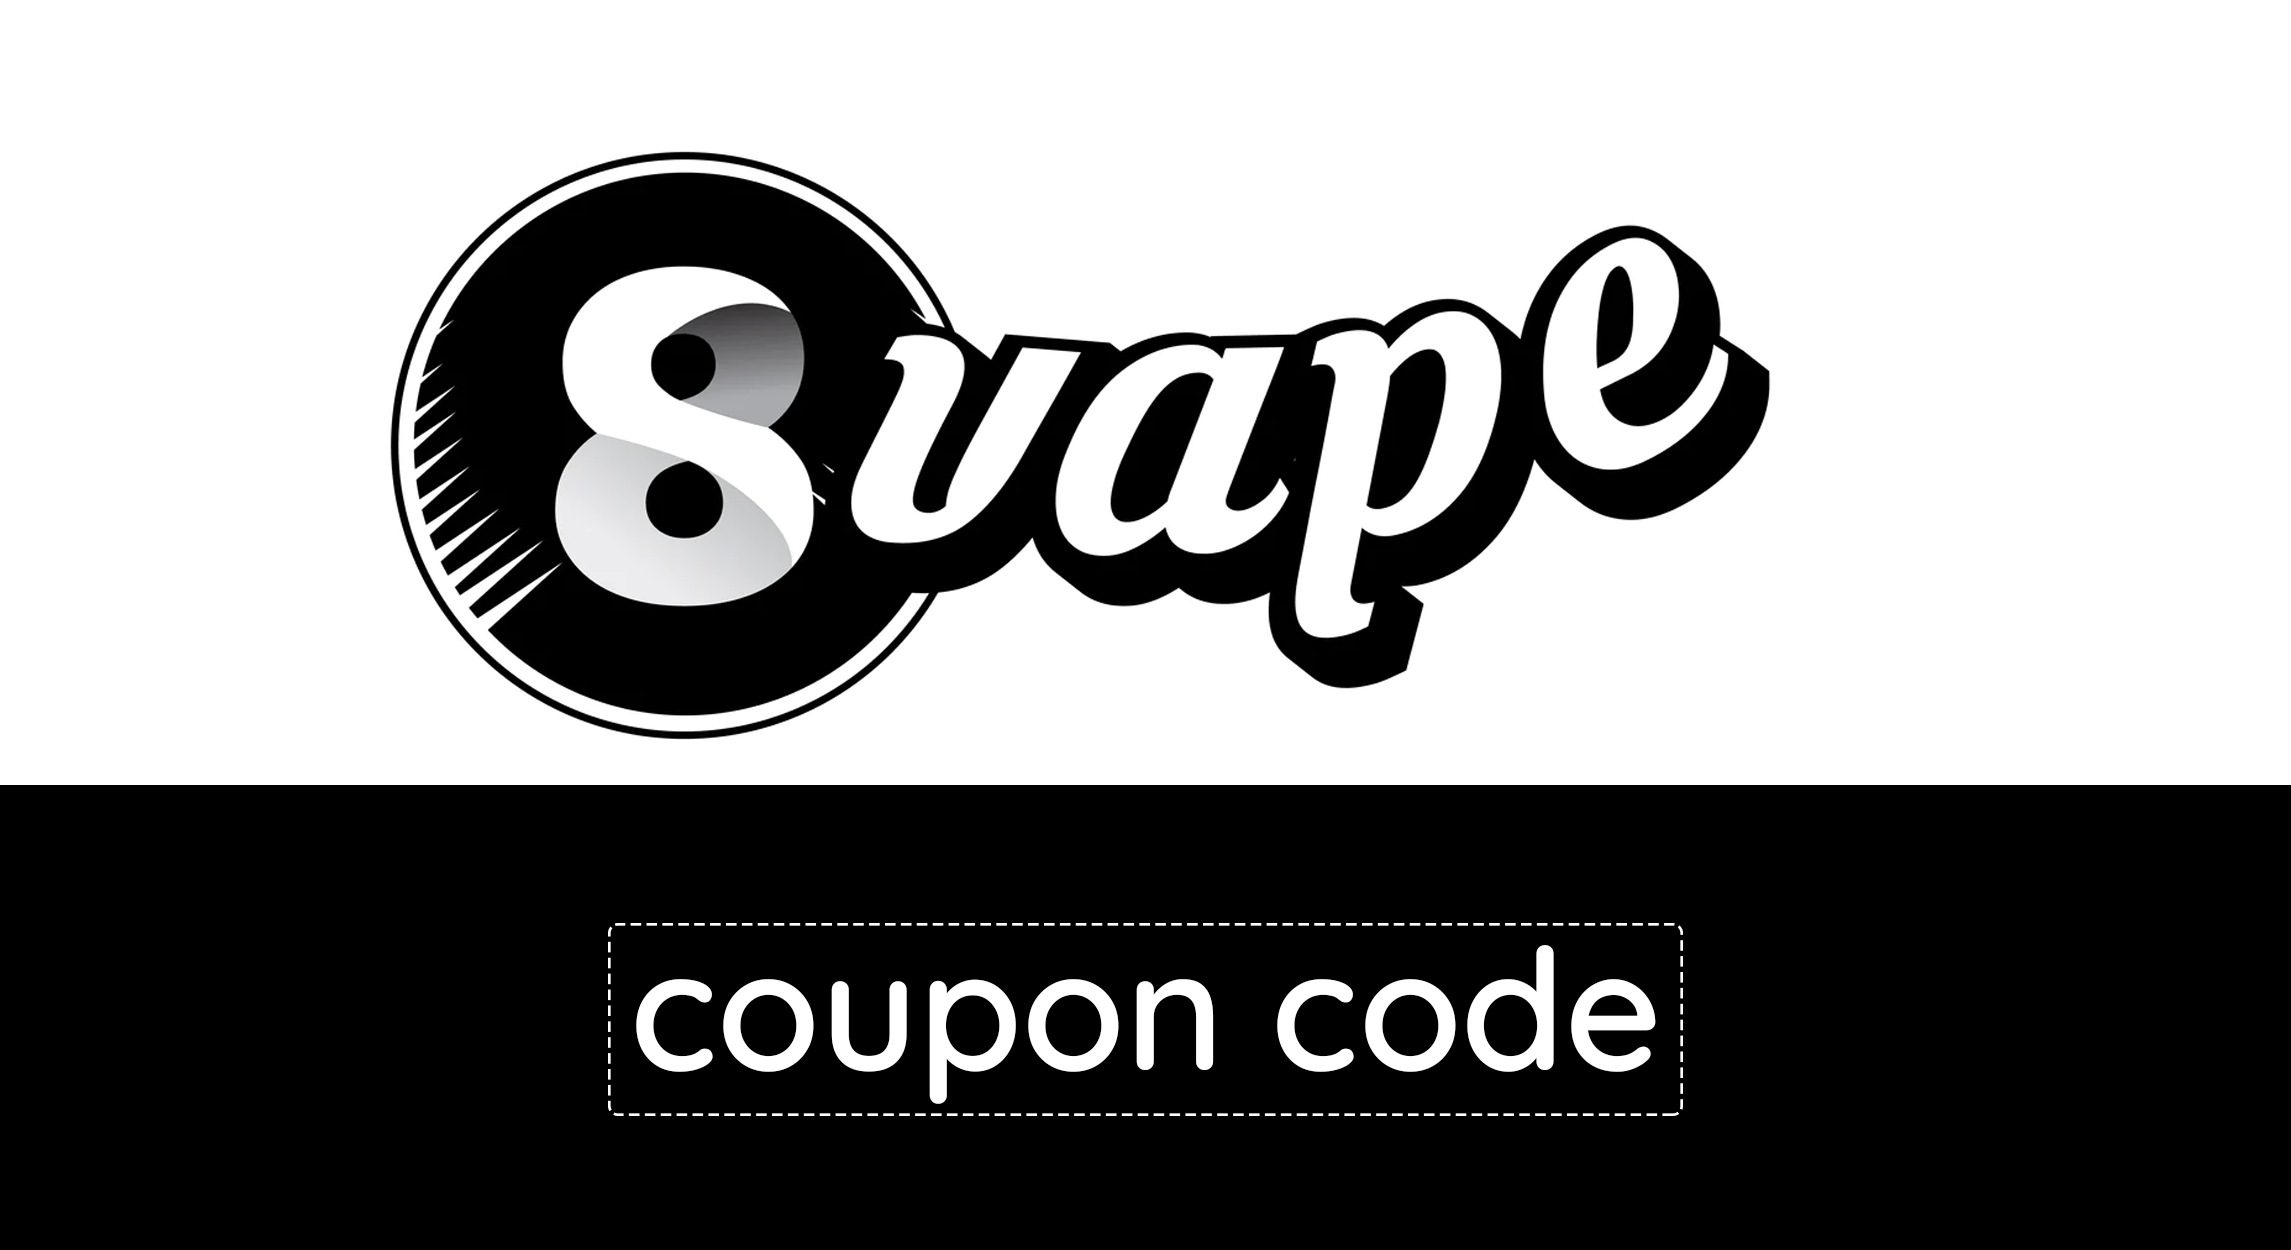 Eightvape coupon code